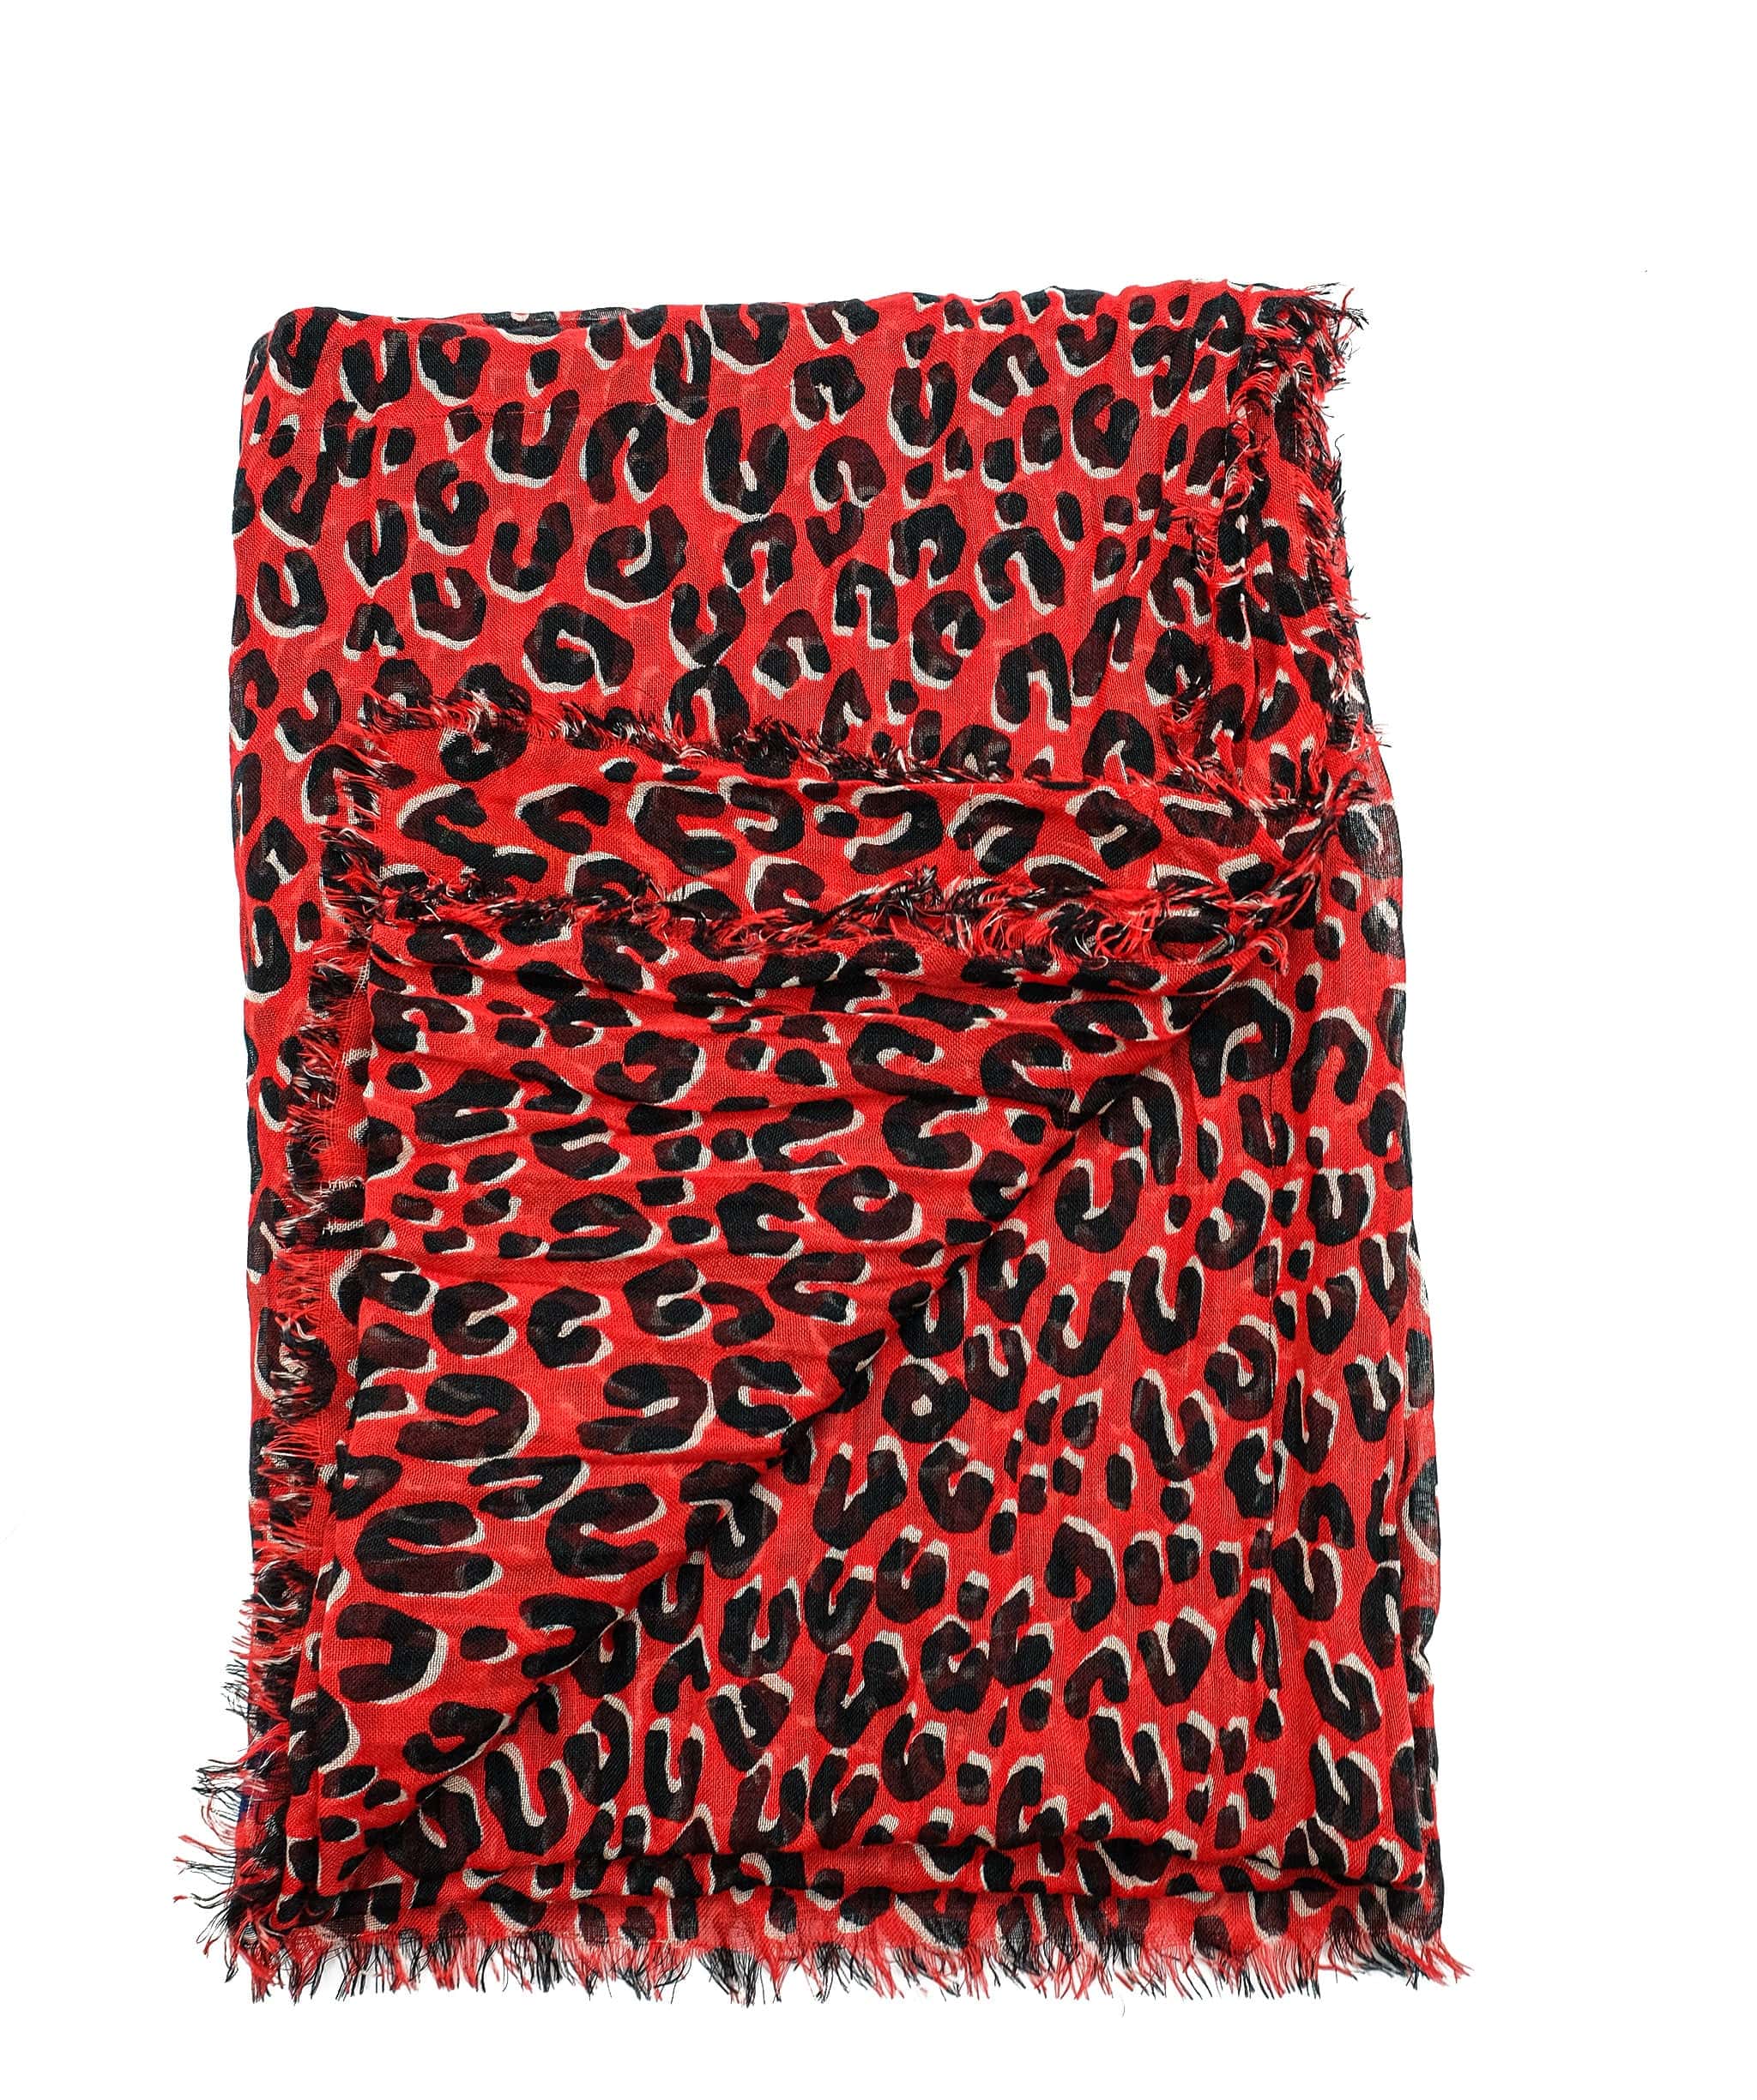 Louis Vuitton louis vuitton stephen sprouse scarf Red RJC1519